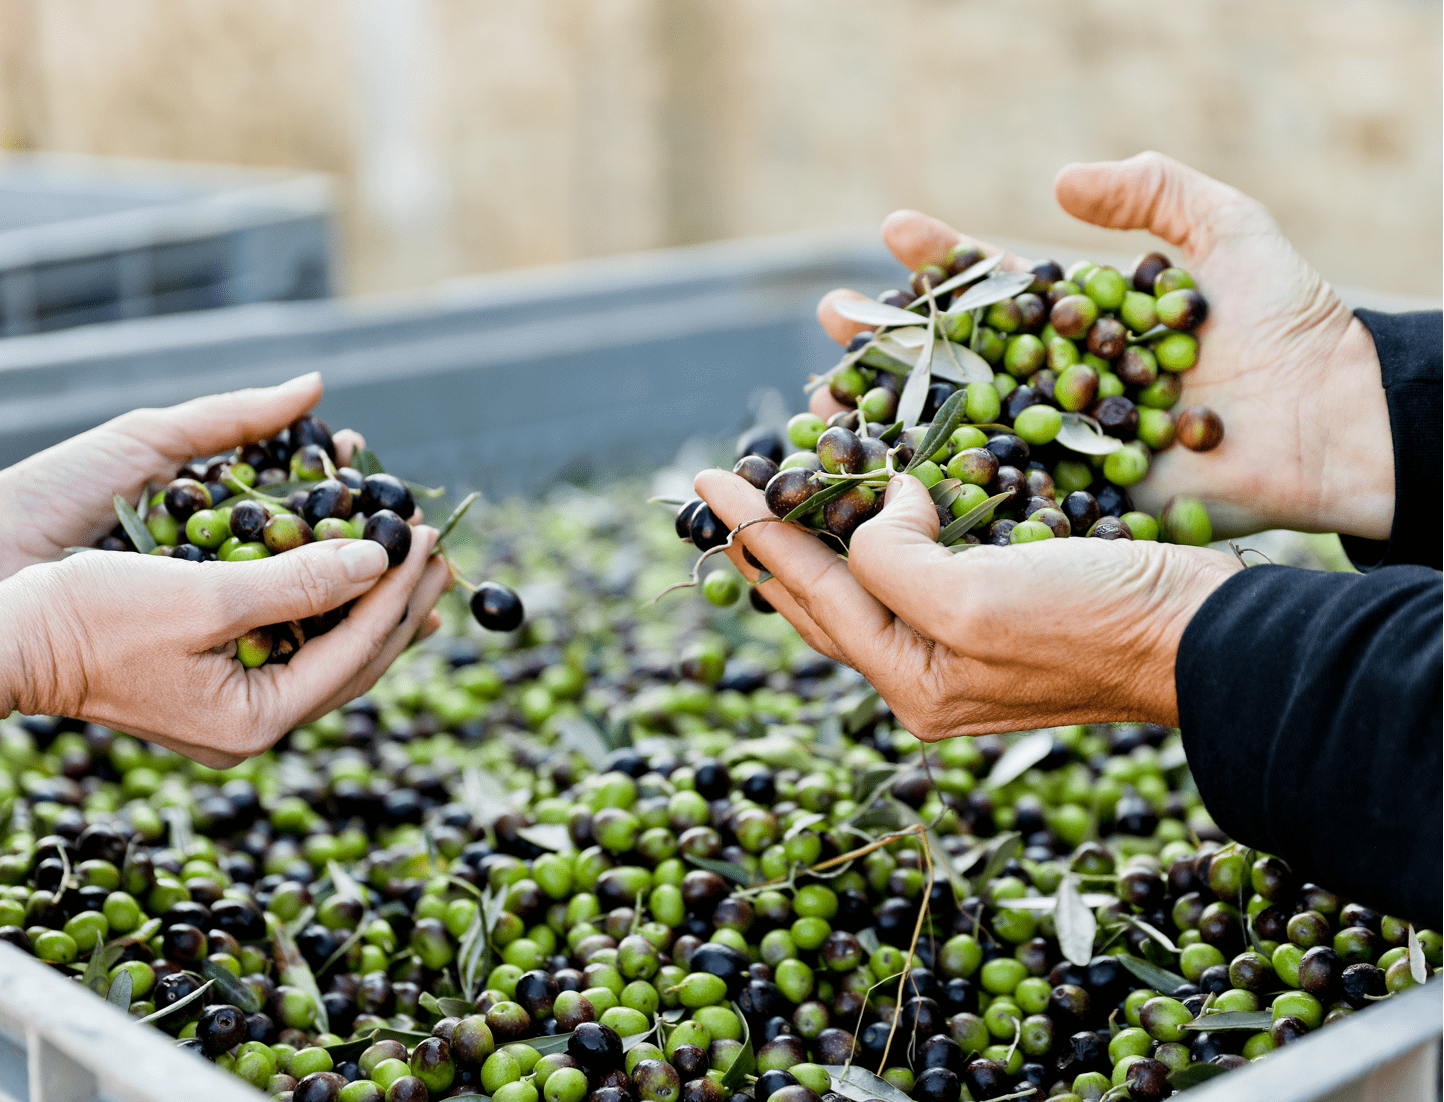 hands examining fresh olives